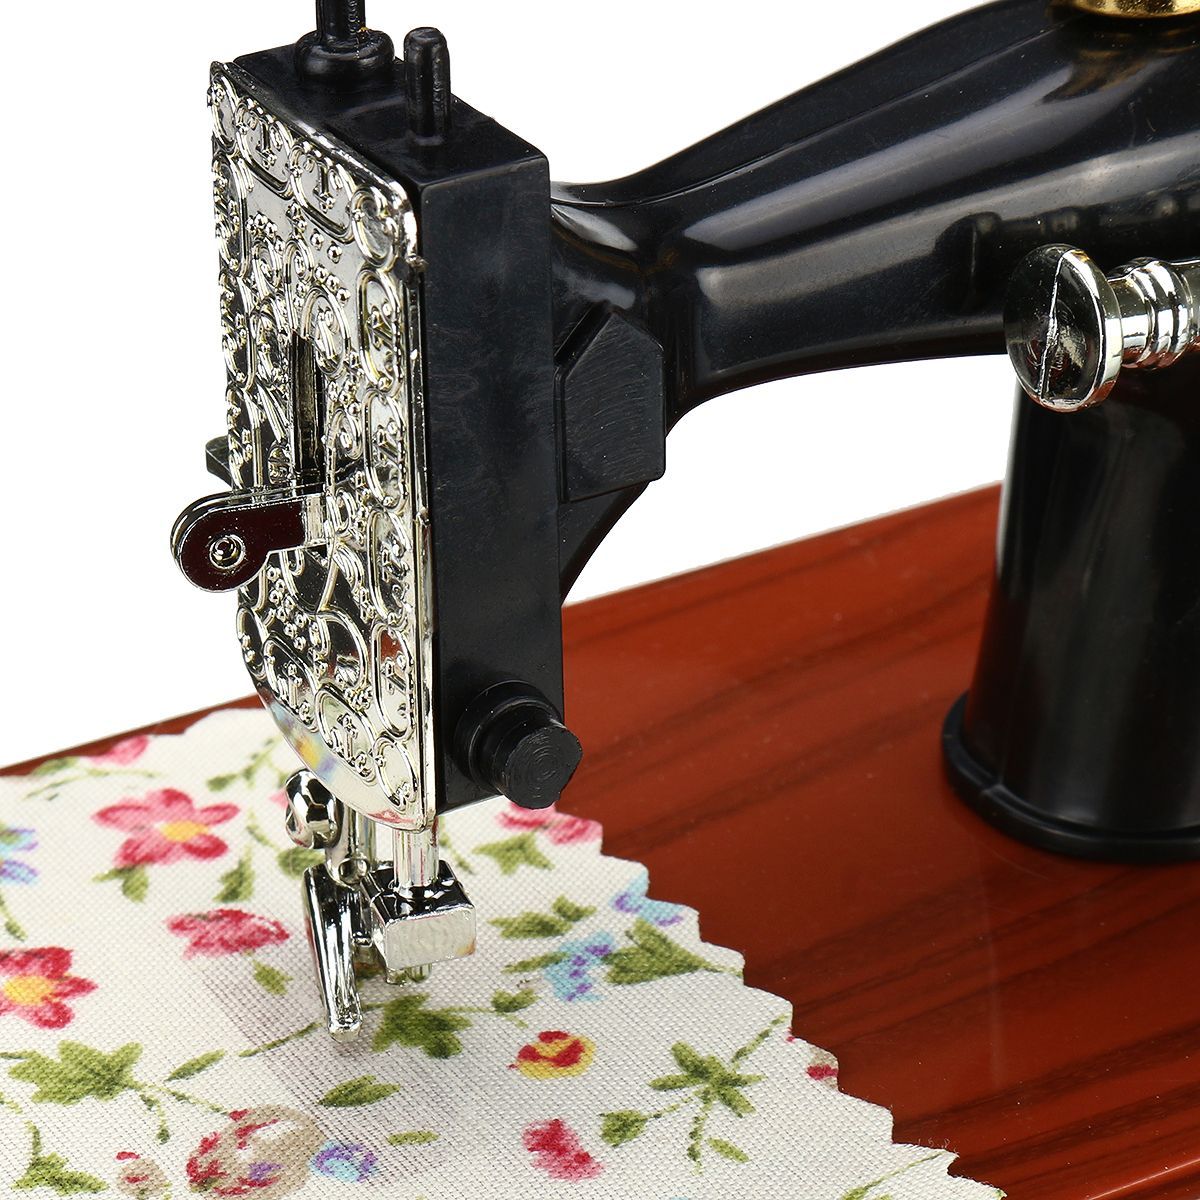 Retro-Vintage-Mini-Sewing-Machine-Shaped-Clockwork-Music-Box-Table-Home-Decor-1628492